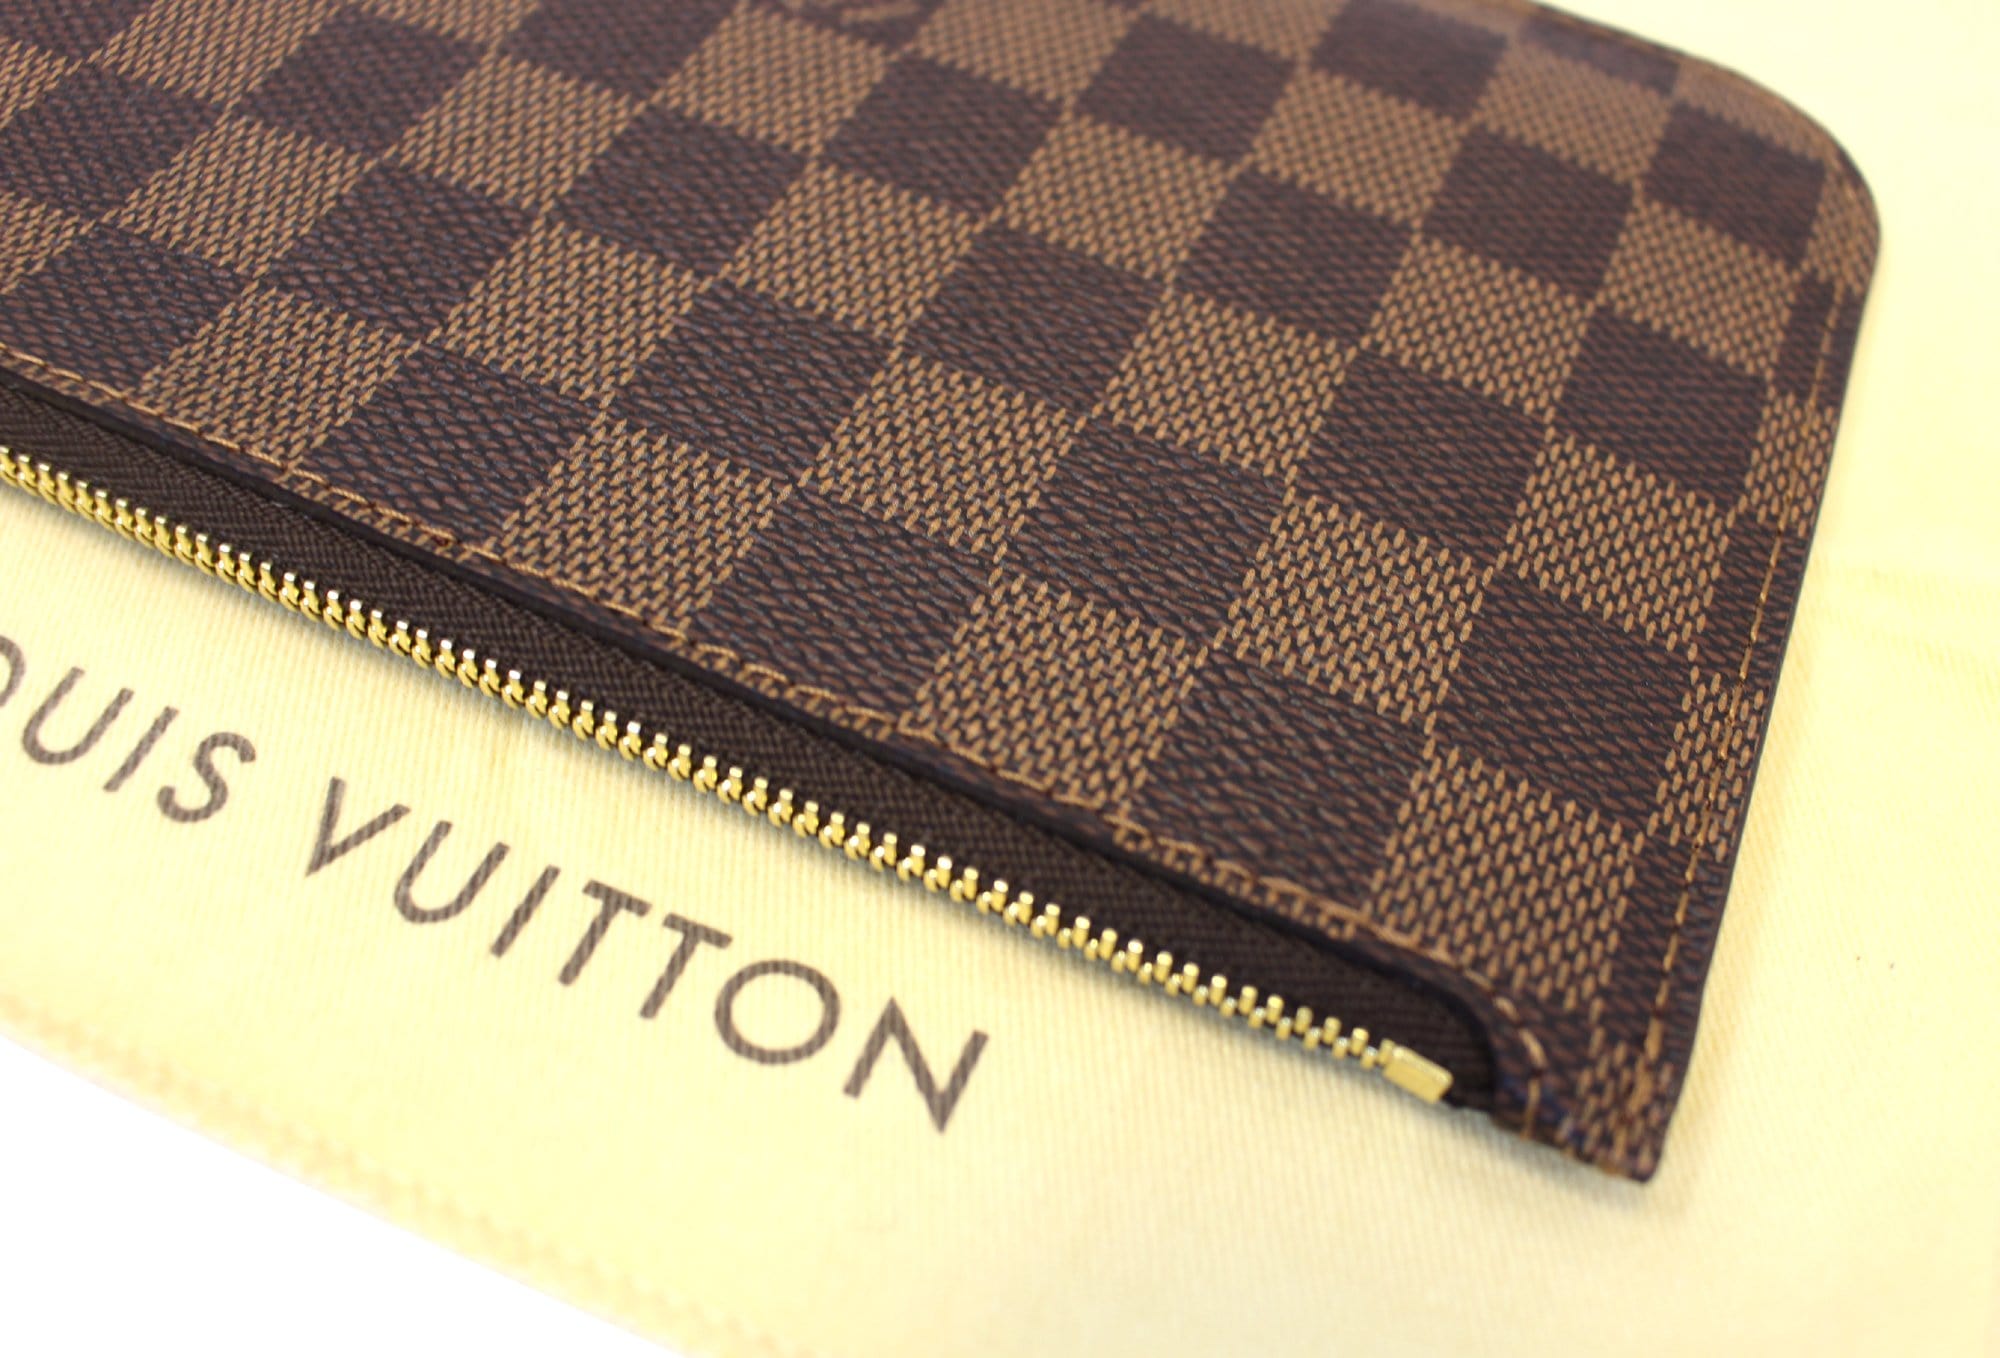 Louis Vuitton damier ebene neverfull pouch – My Girlfriend's